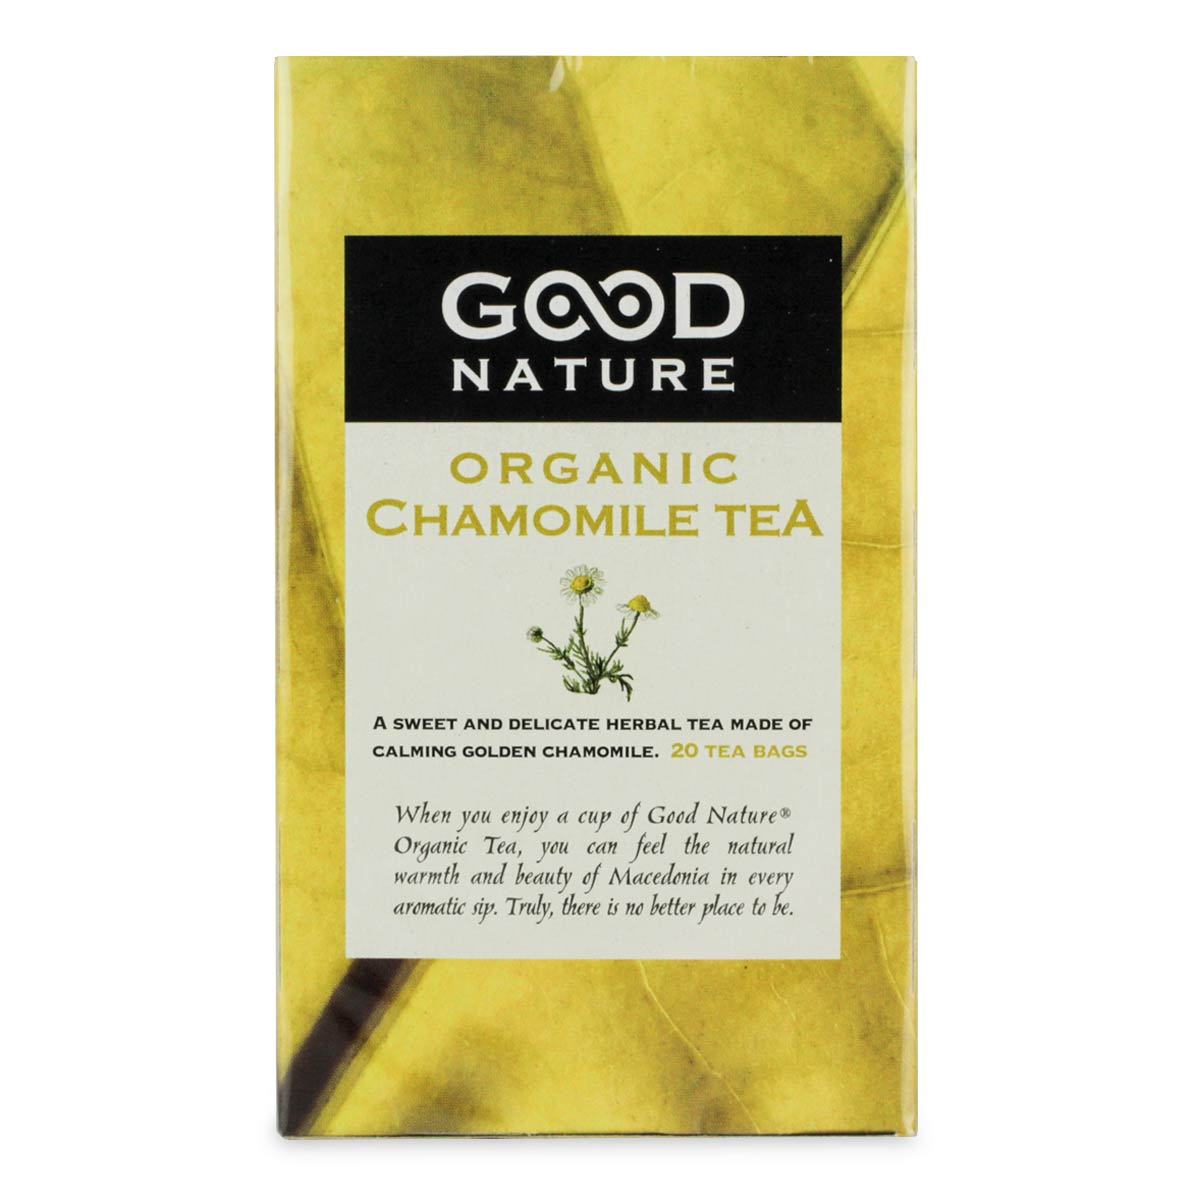 Primary image of Organic Chamomile Tea Bags